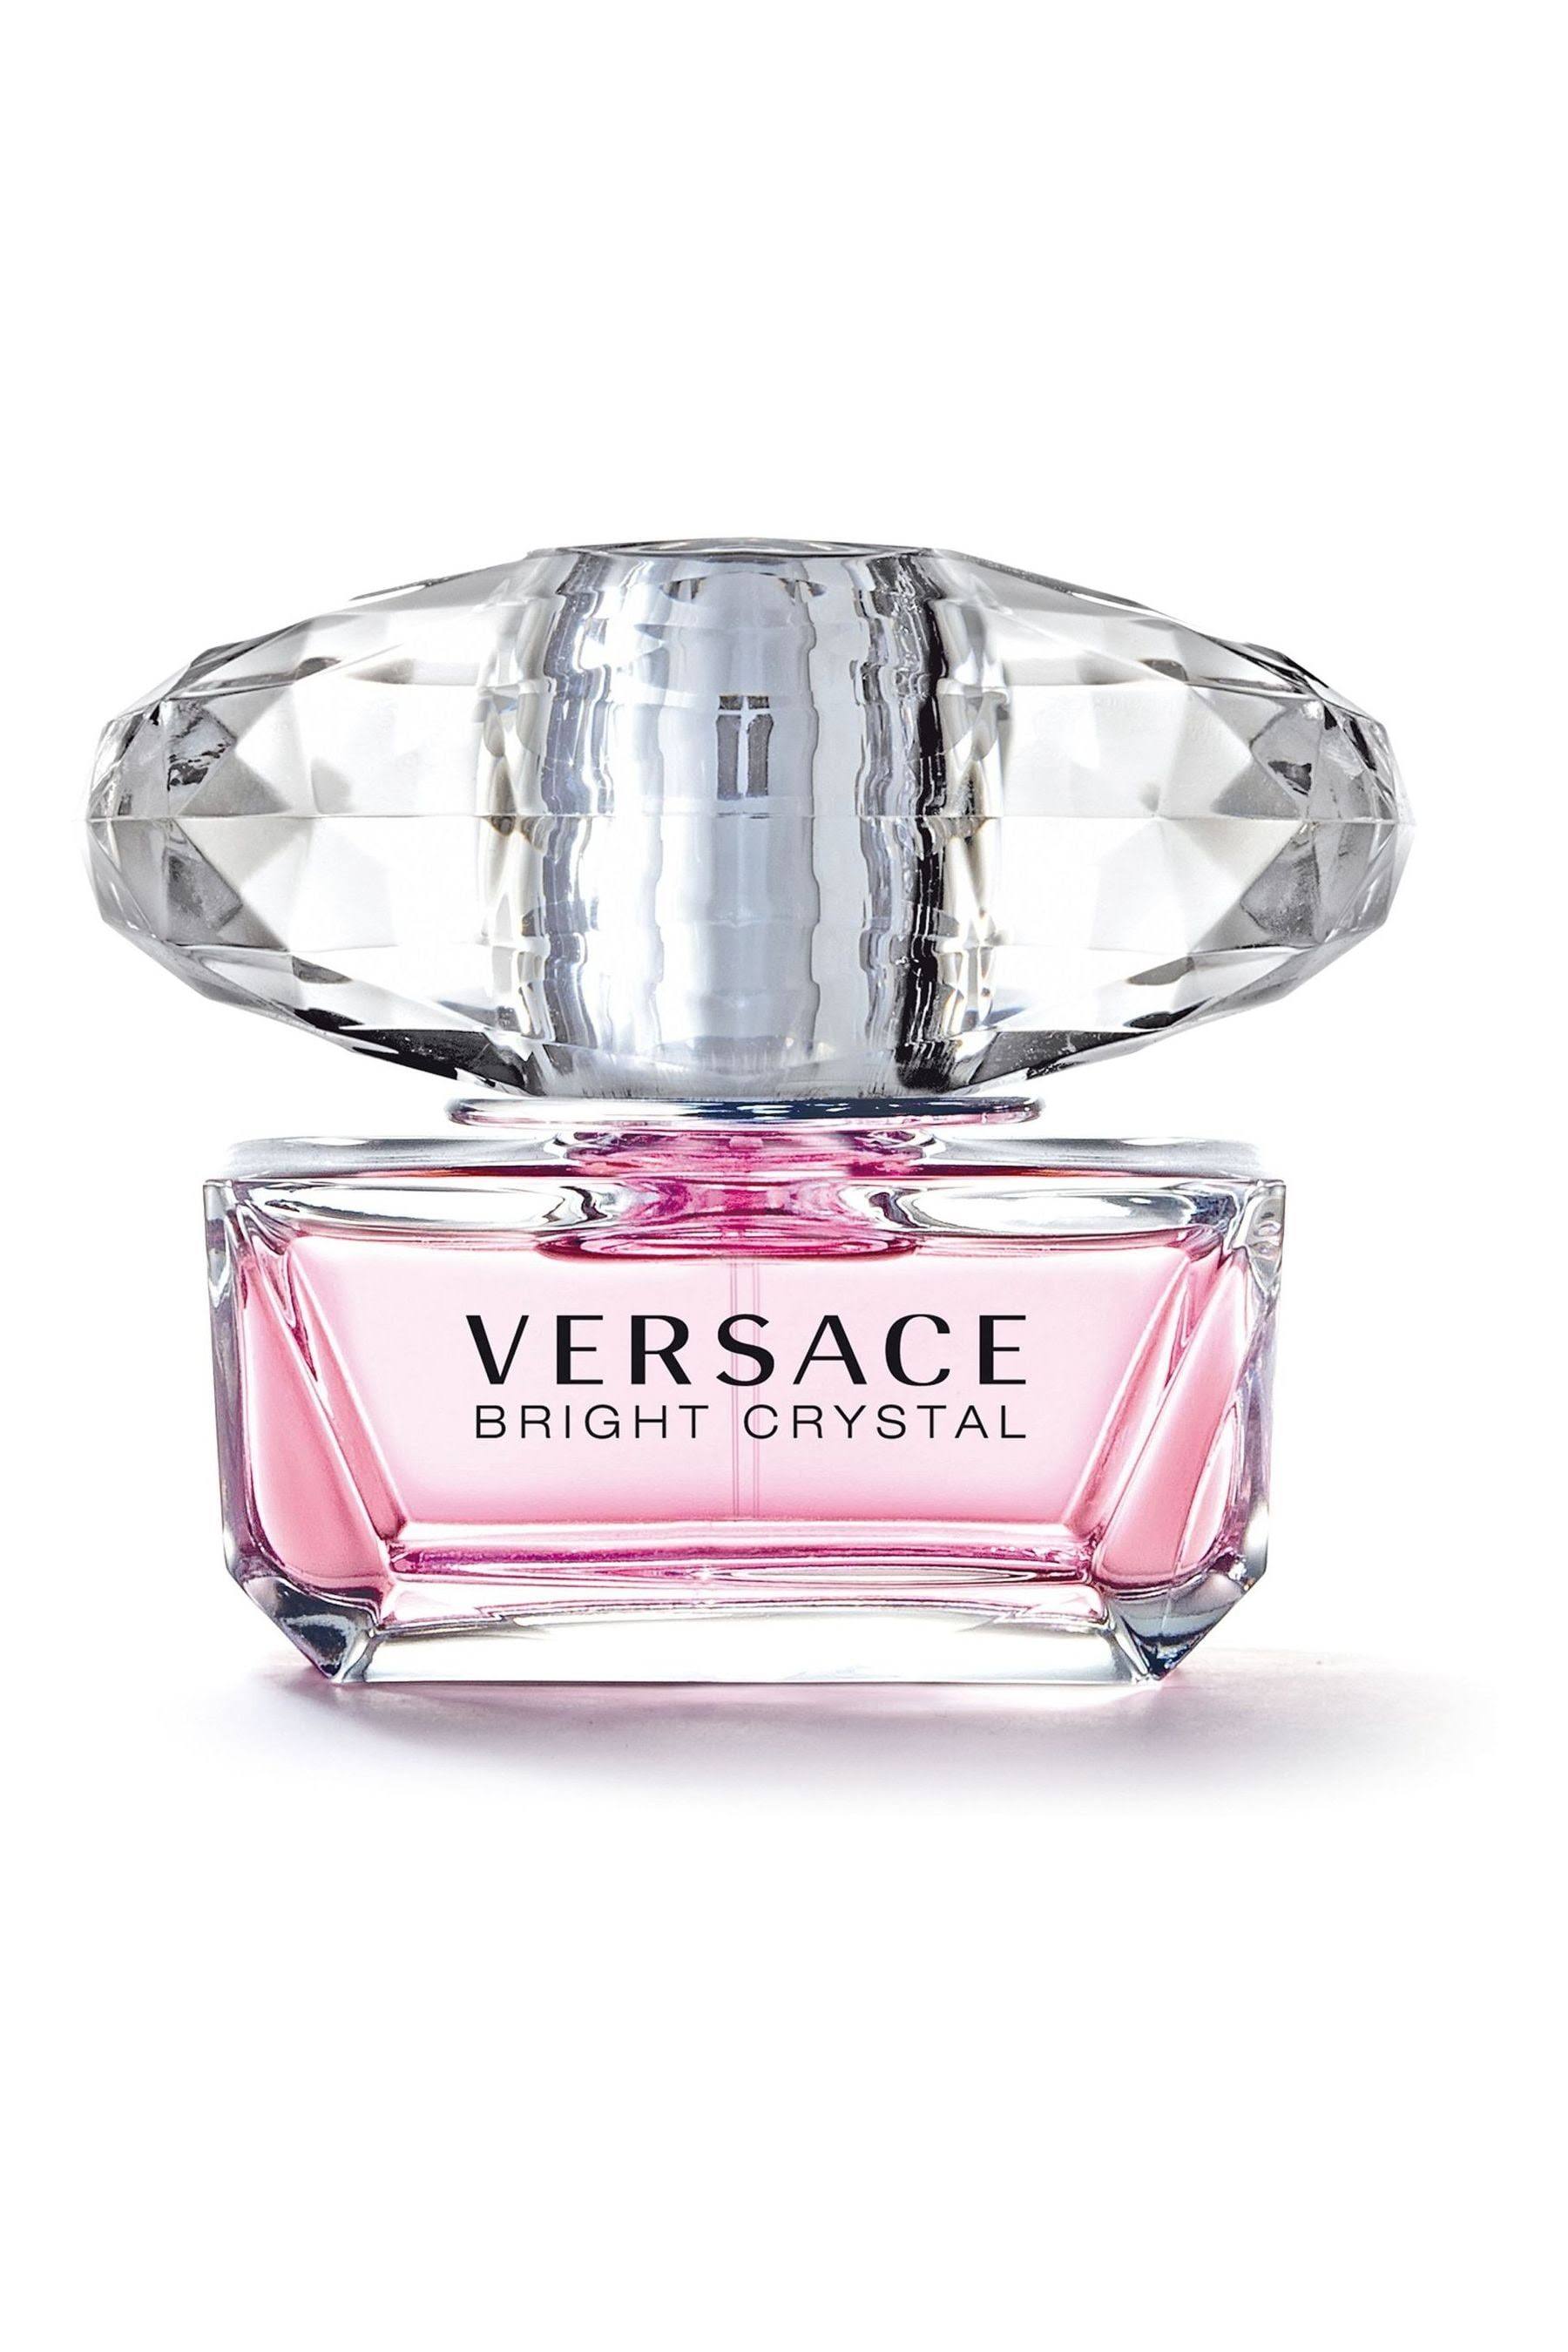 Versace Bright Crystal For Women Eau De Toilette - 50ml